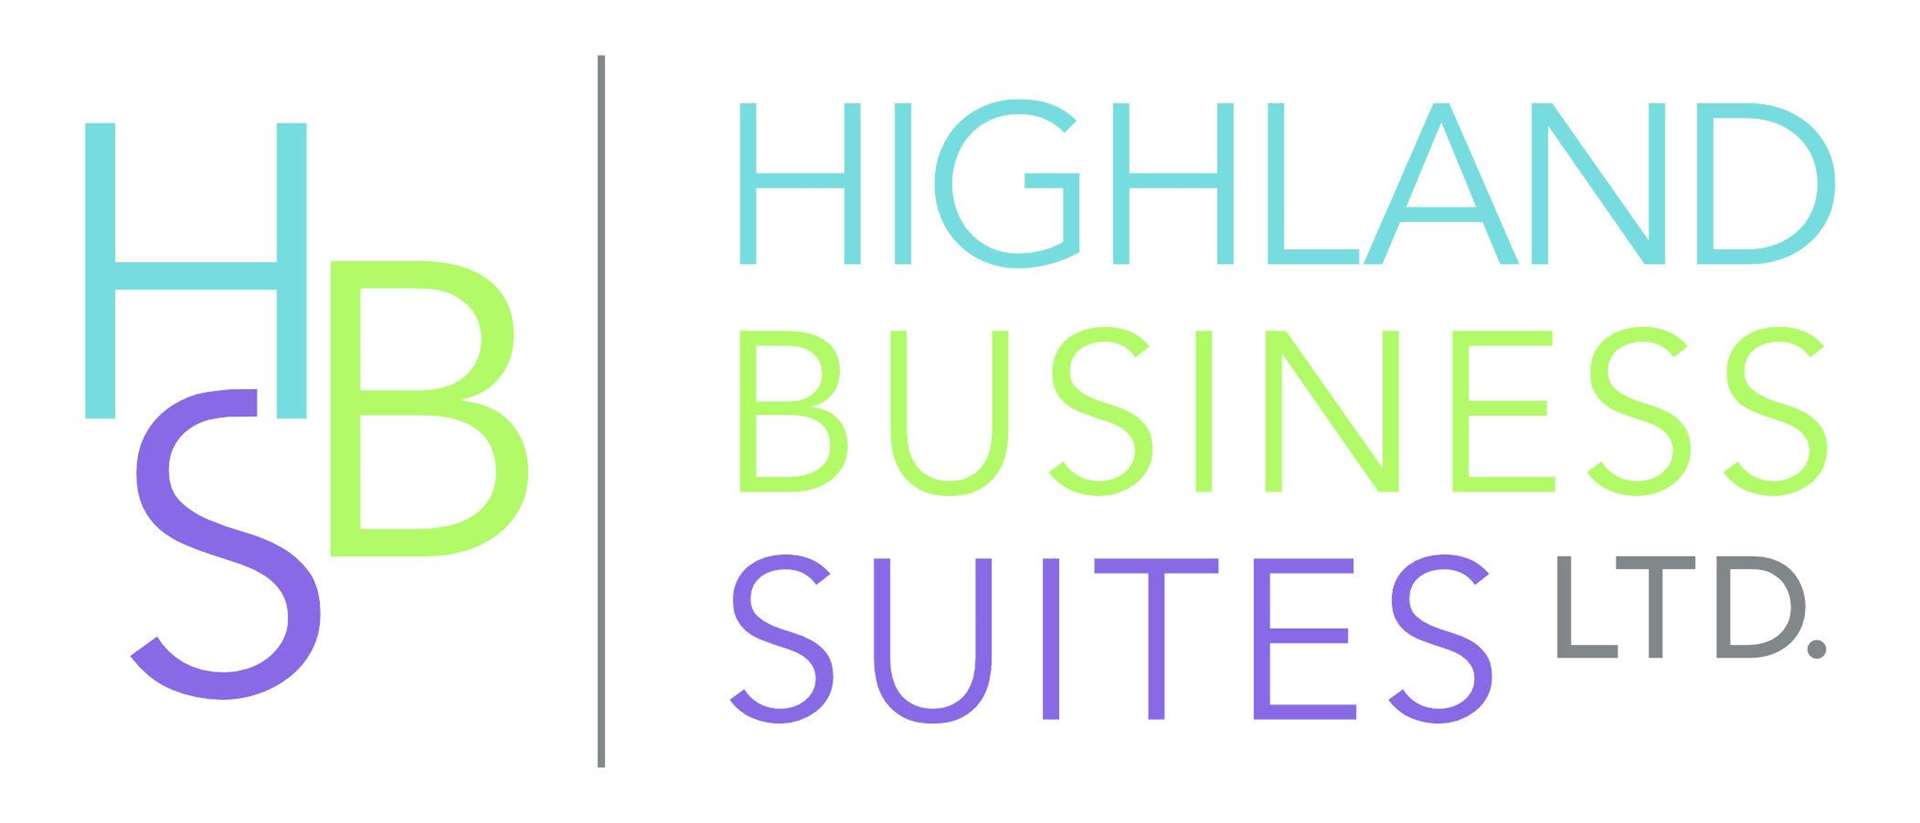 Highland Business Suites.